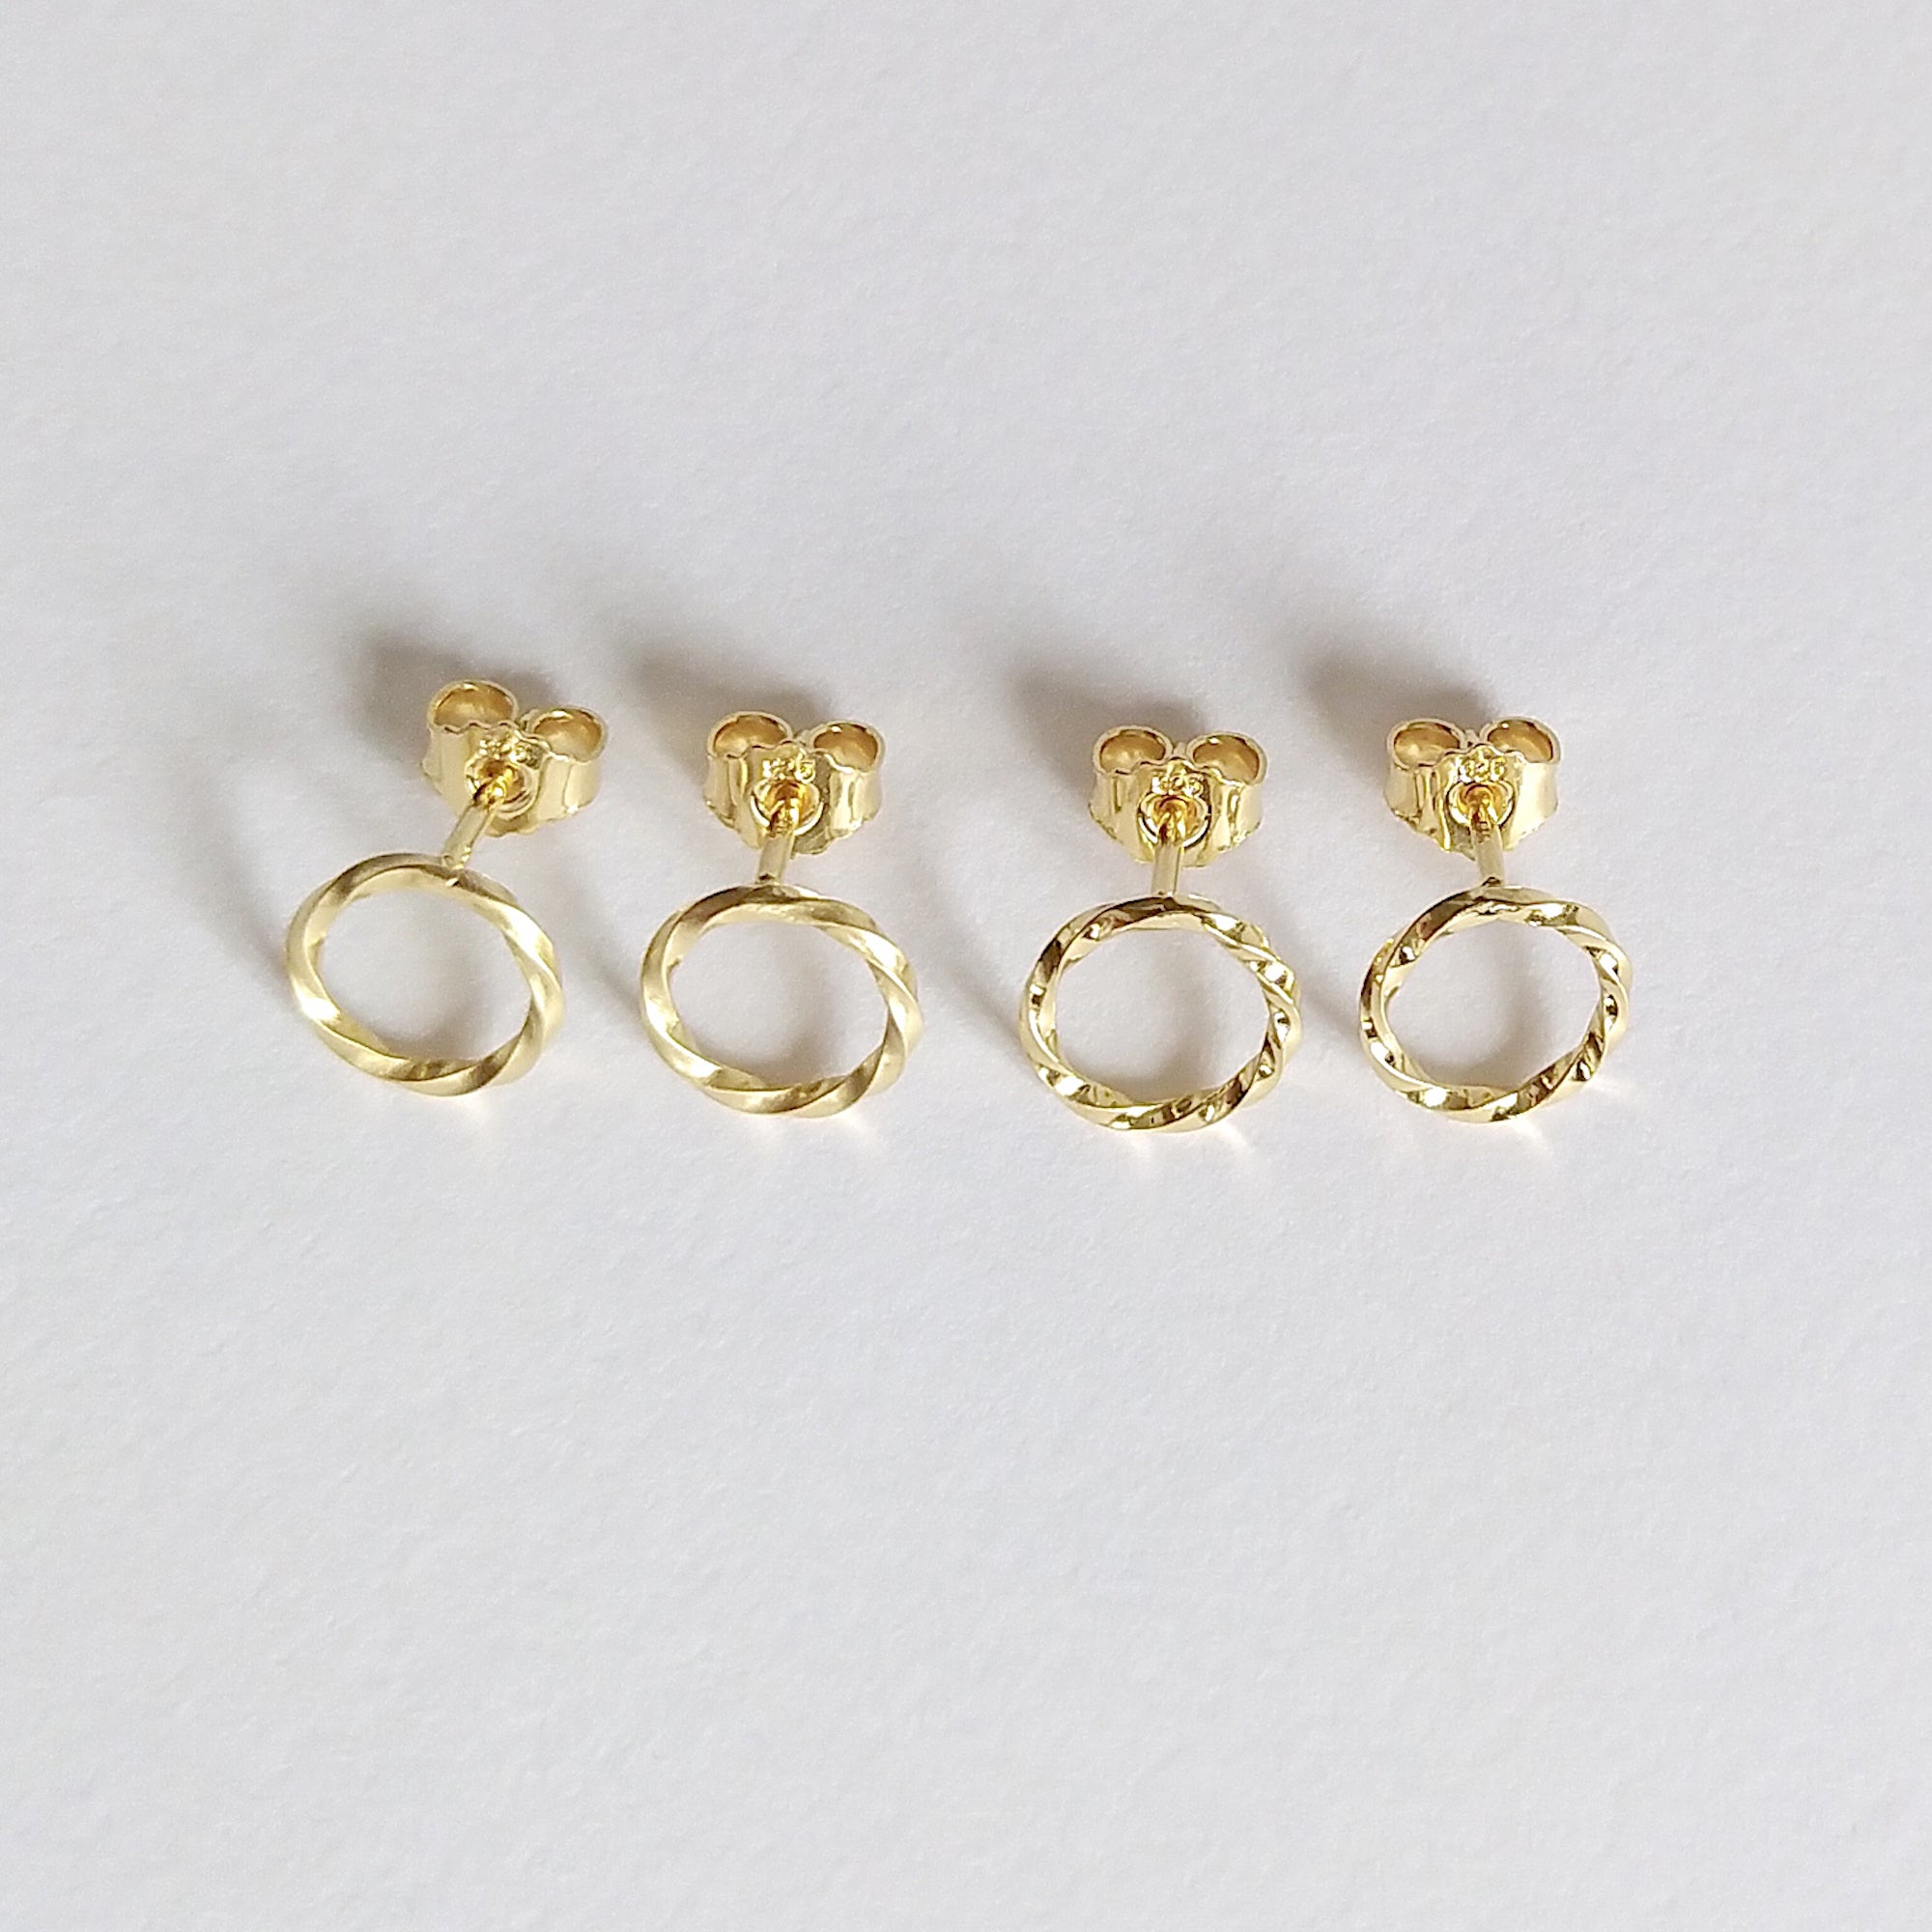 Hexagon Rose Cut Diamond Stud Earrings in Yellow Gold - SOLD - Sholdt Jewelry  Design